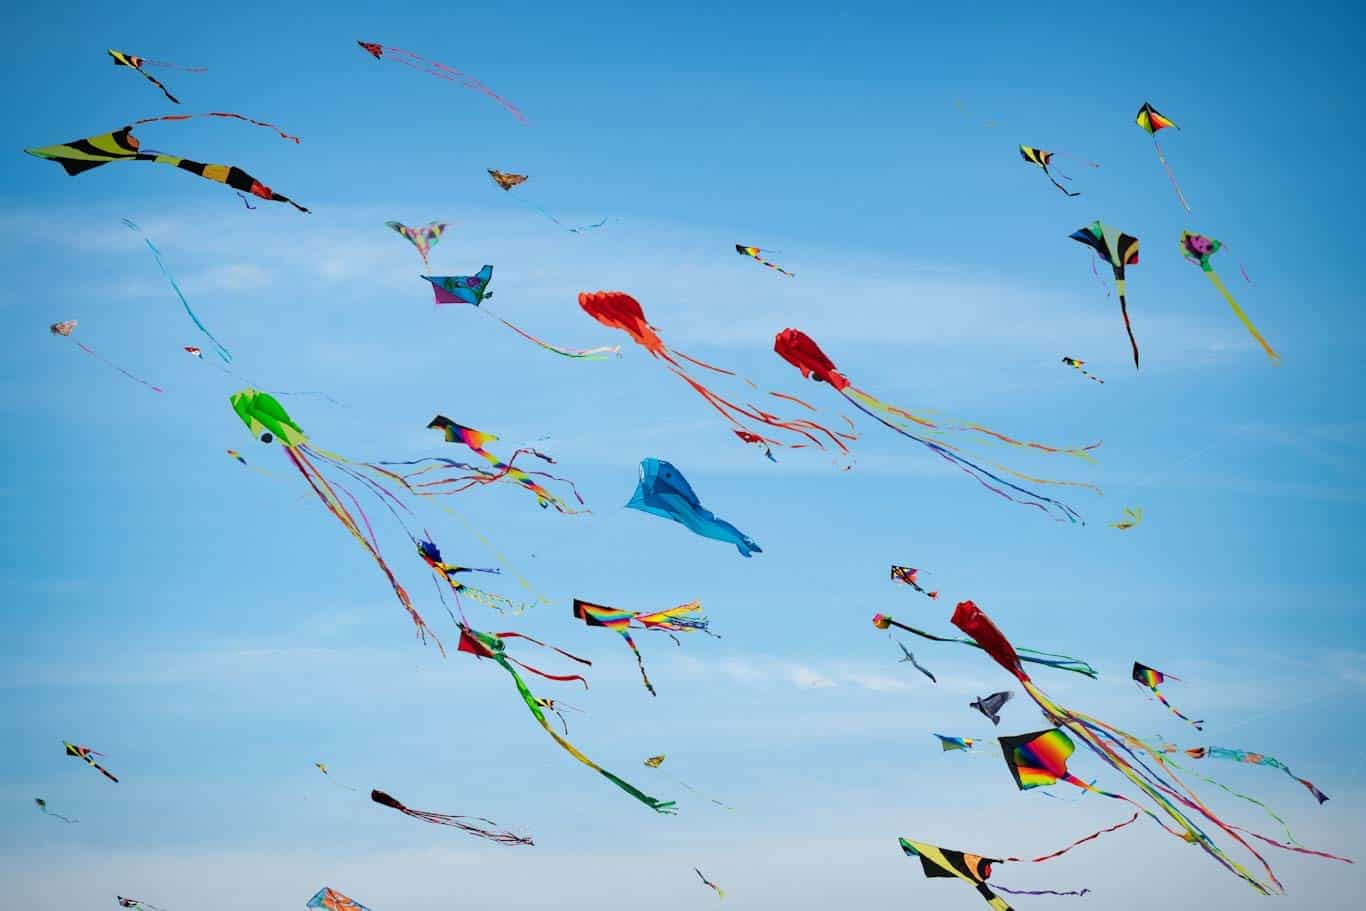 Multiple kites high in the sky